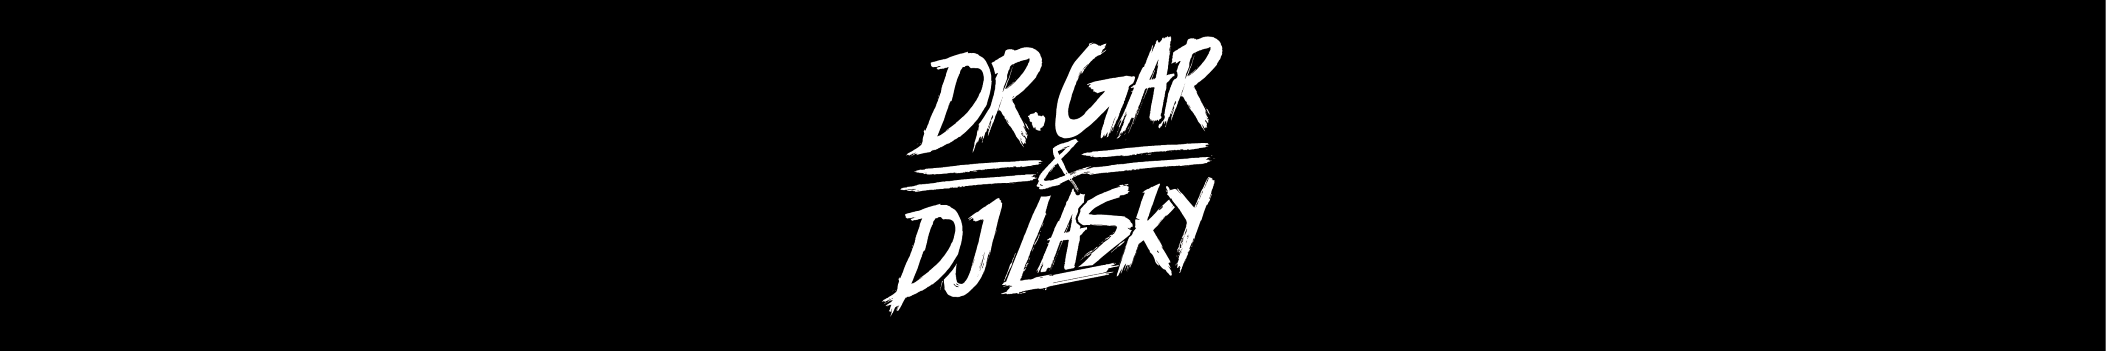 dr.Gar&djLasky